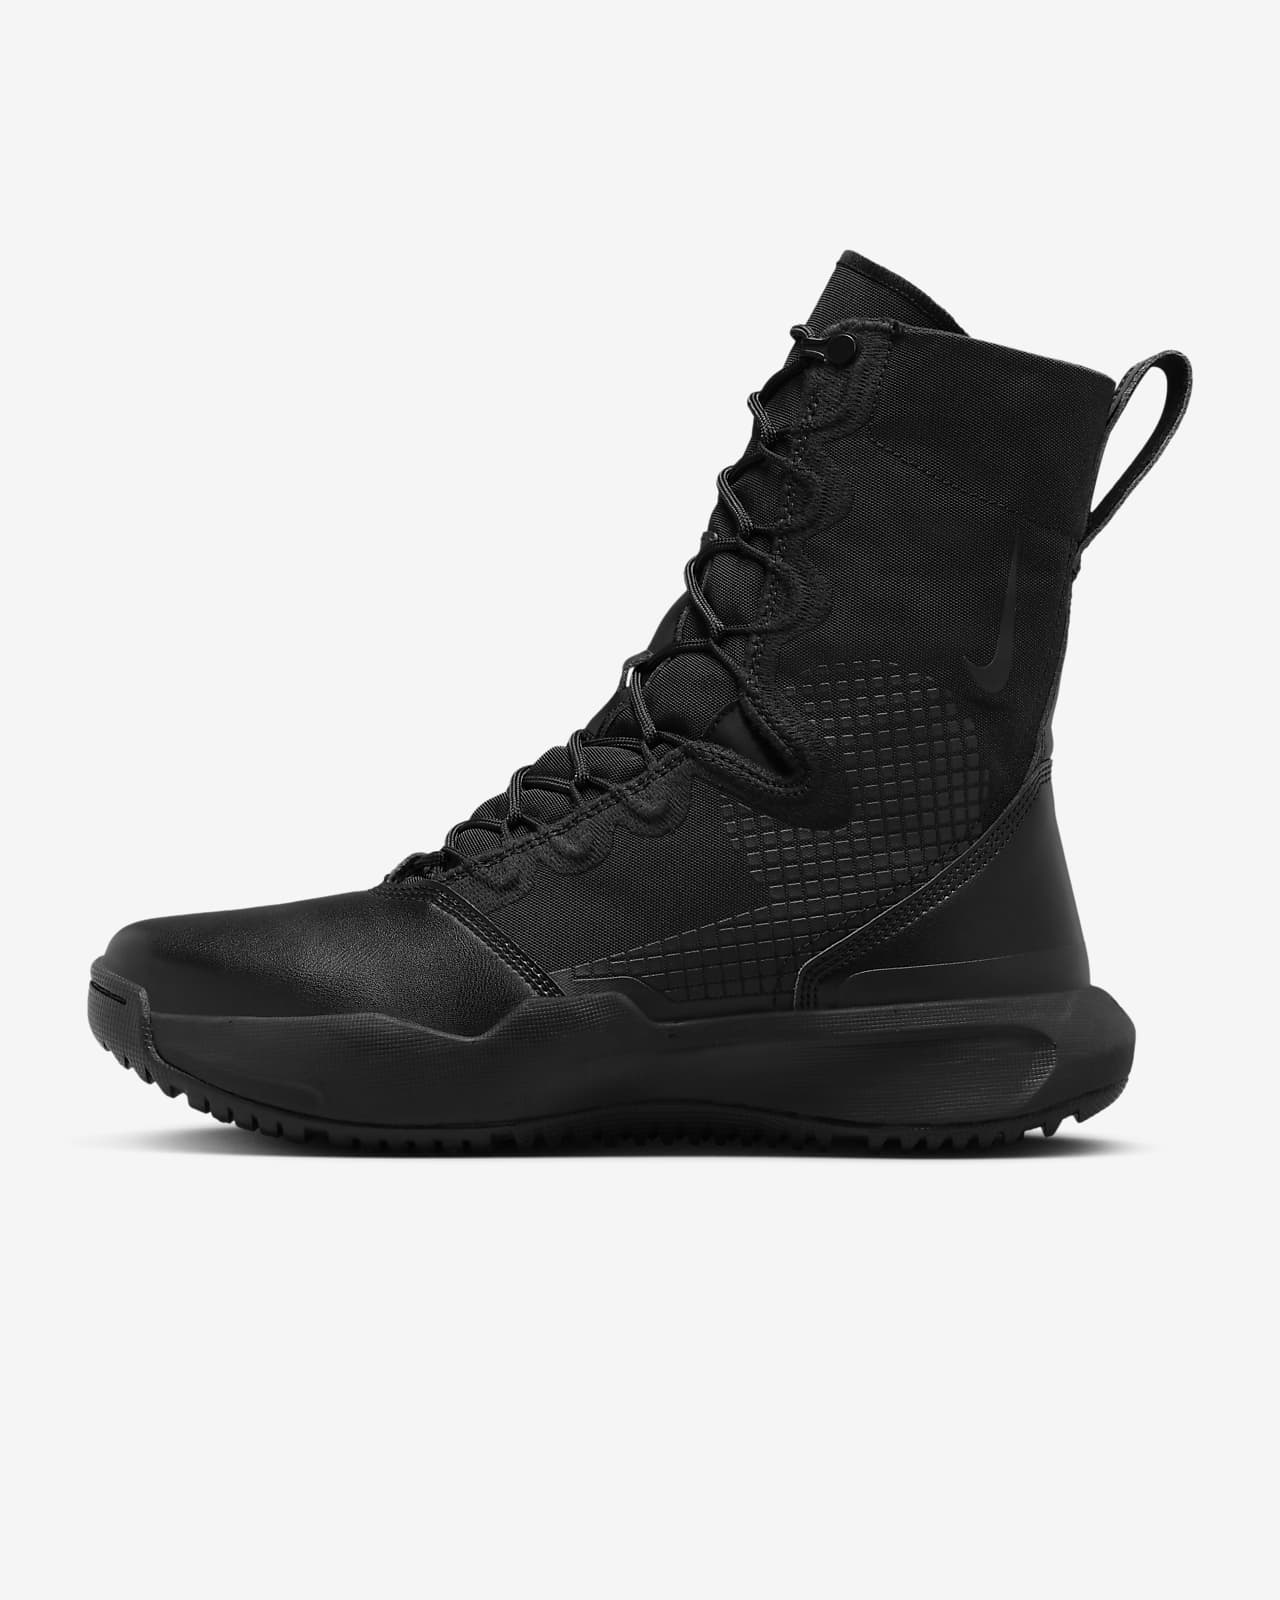 Nike SFB B2 Men's Boots